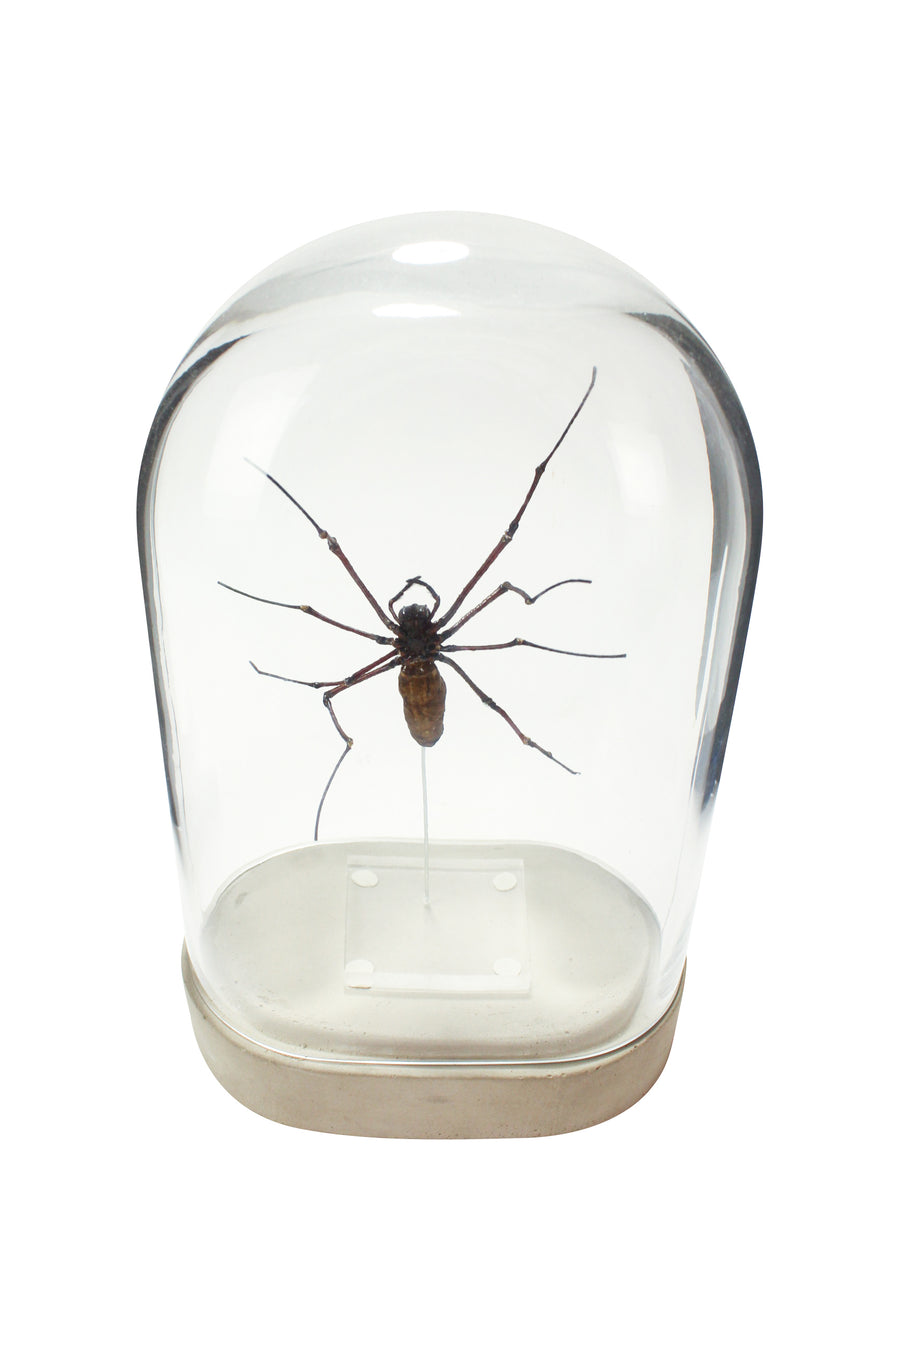 Spider in Glass Dome